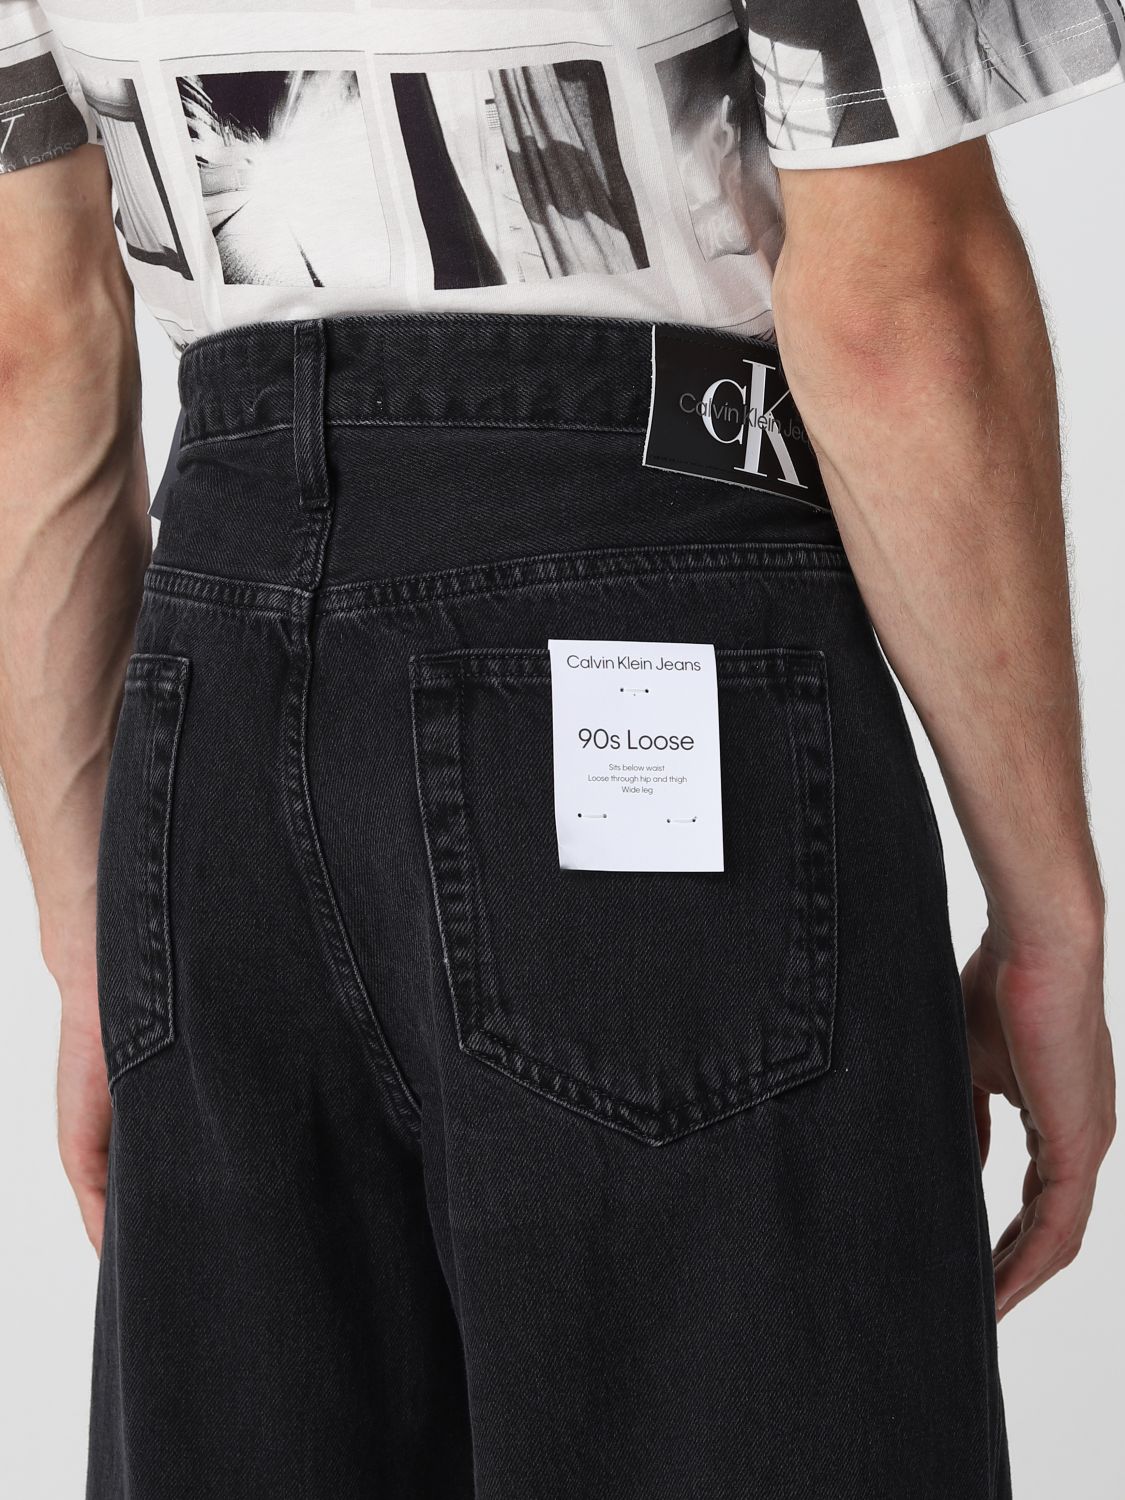 CALVIN KLEIN JEANS: 90s loose denim jeans - Black | Calvin Klein Jeans jeans  J30J321682 online on 